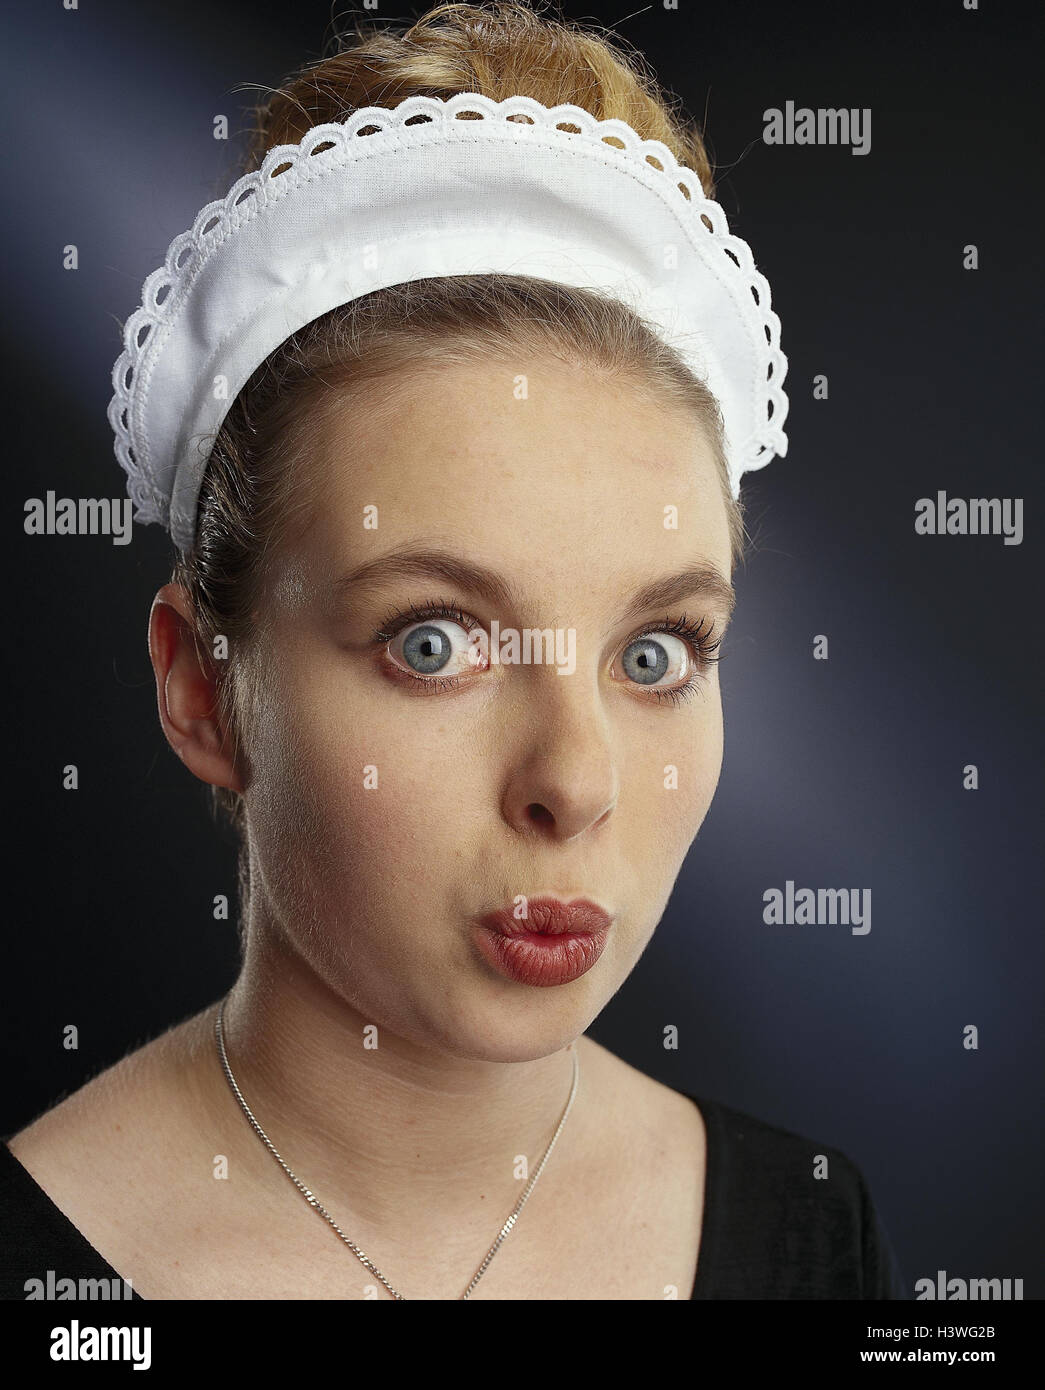 Maidservants, facial play, portrait, mb 79 A5 Stock Photo